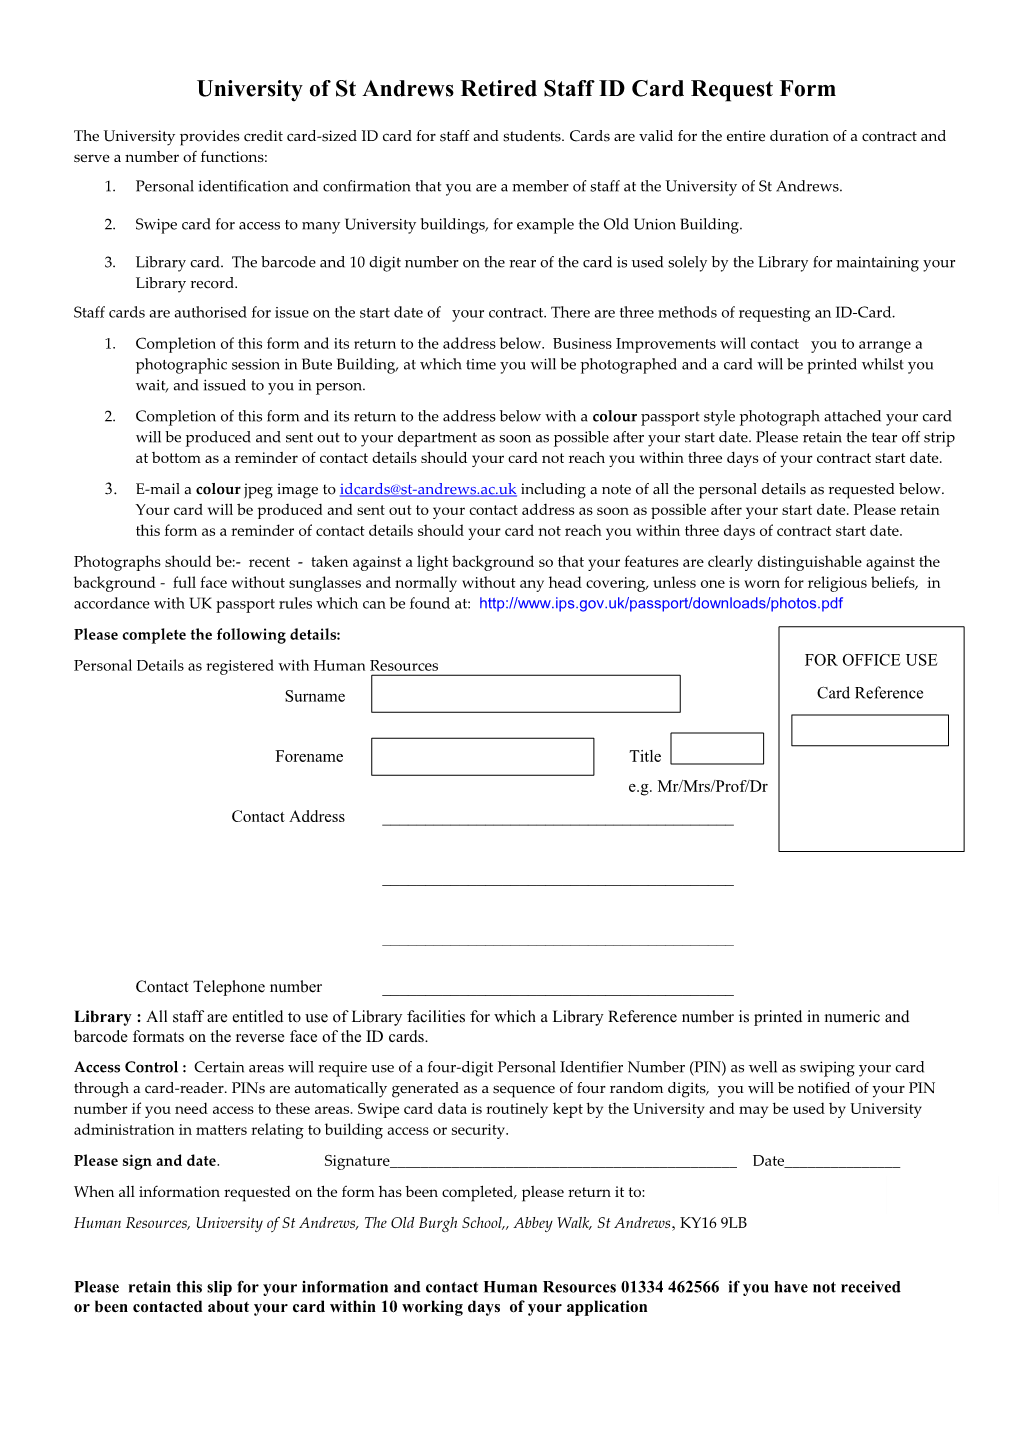 STAFF ID Card Request Form